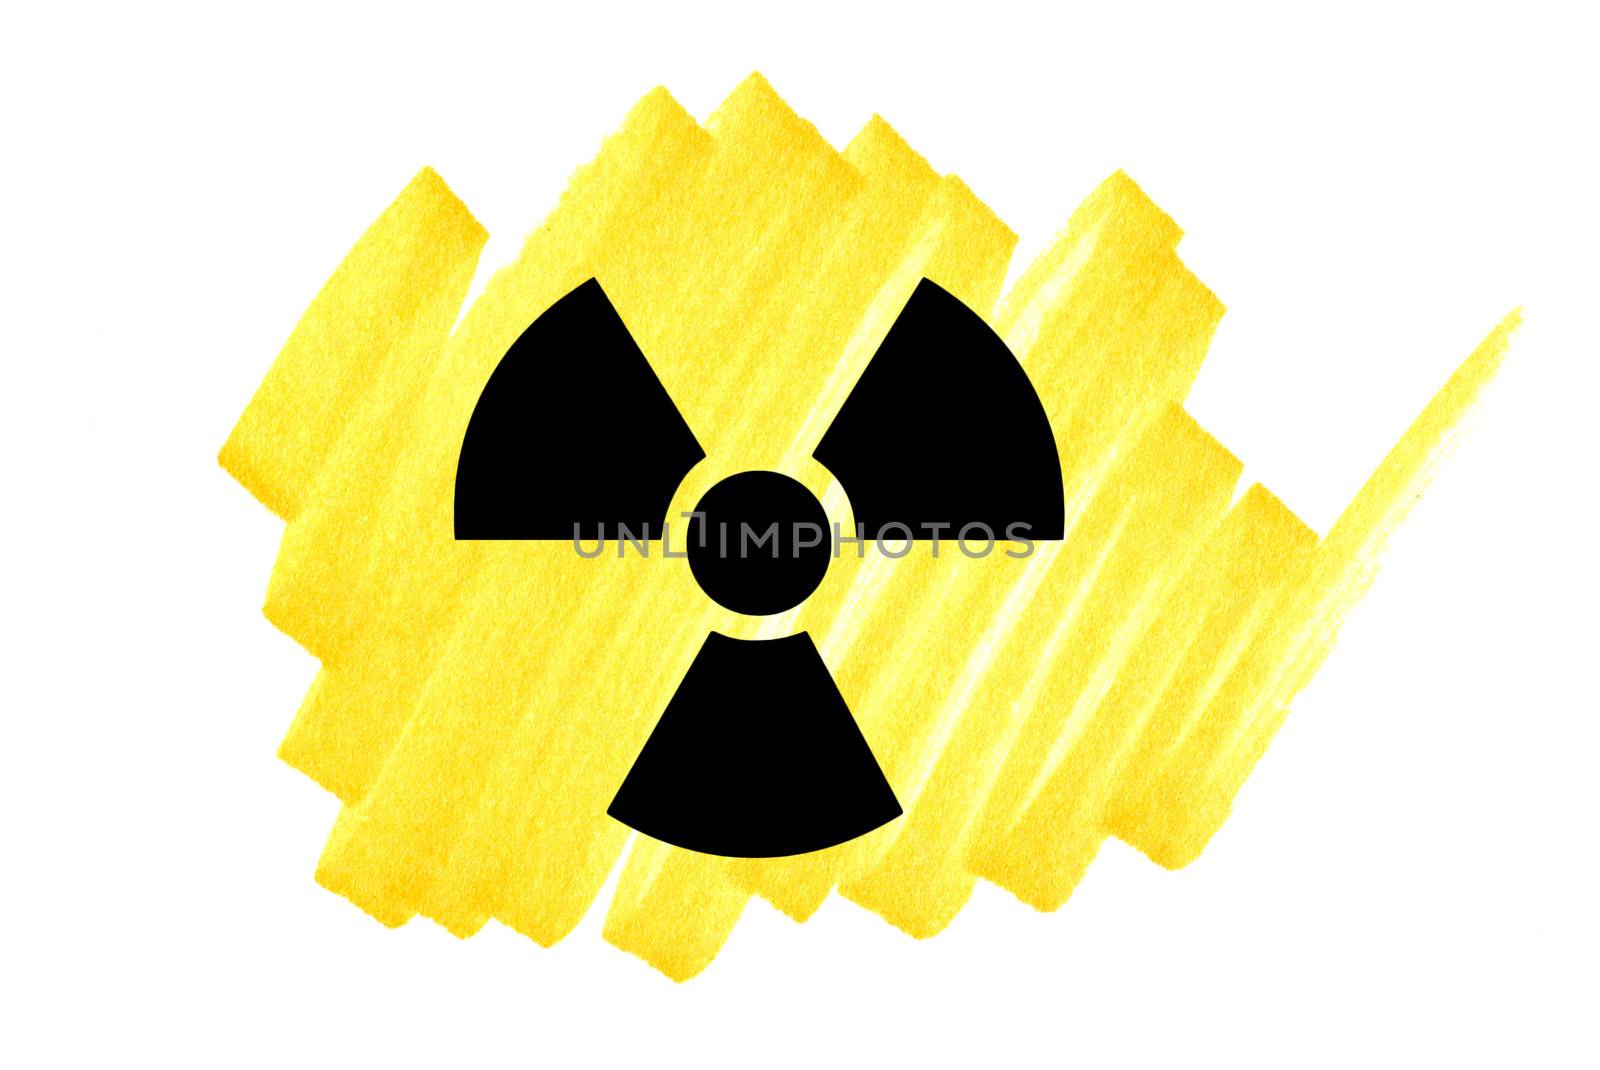 Danger radioactivity symbol by Mirage3